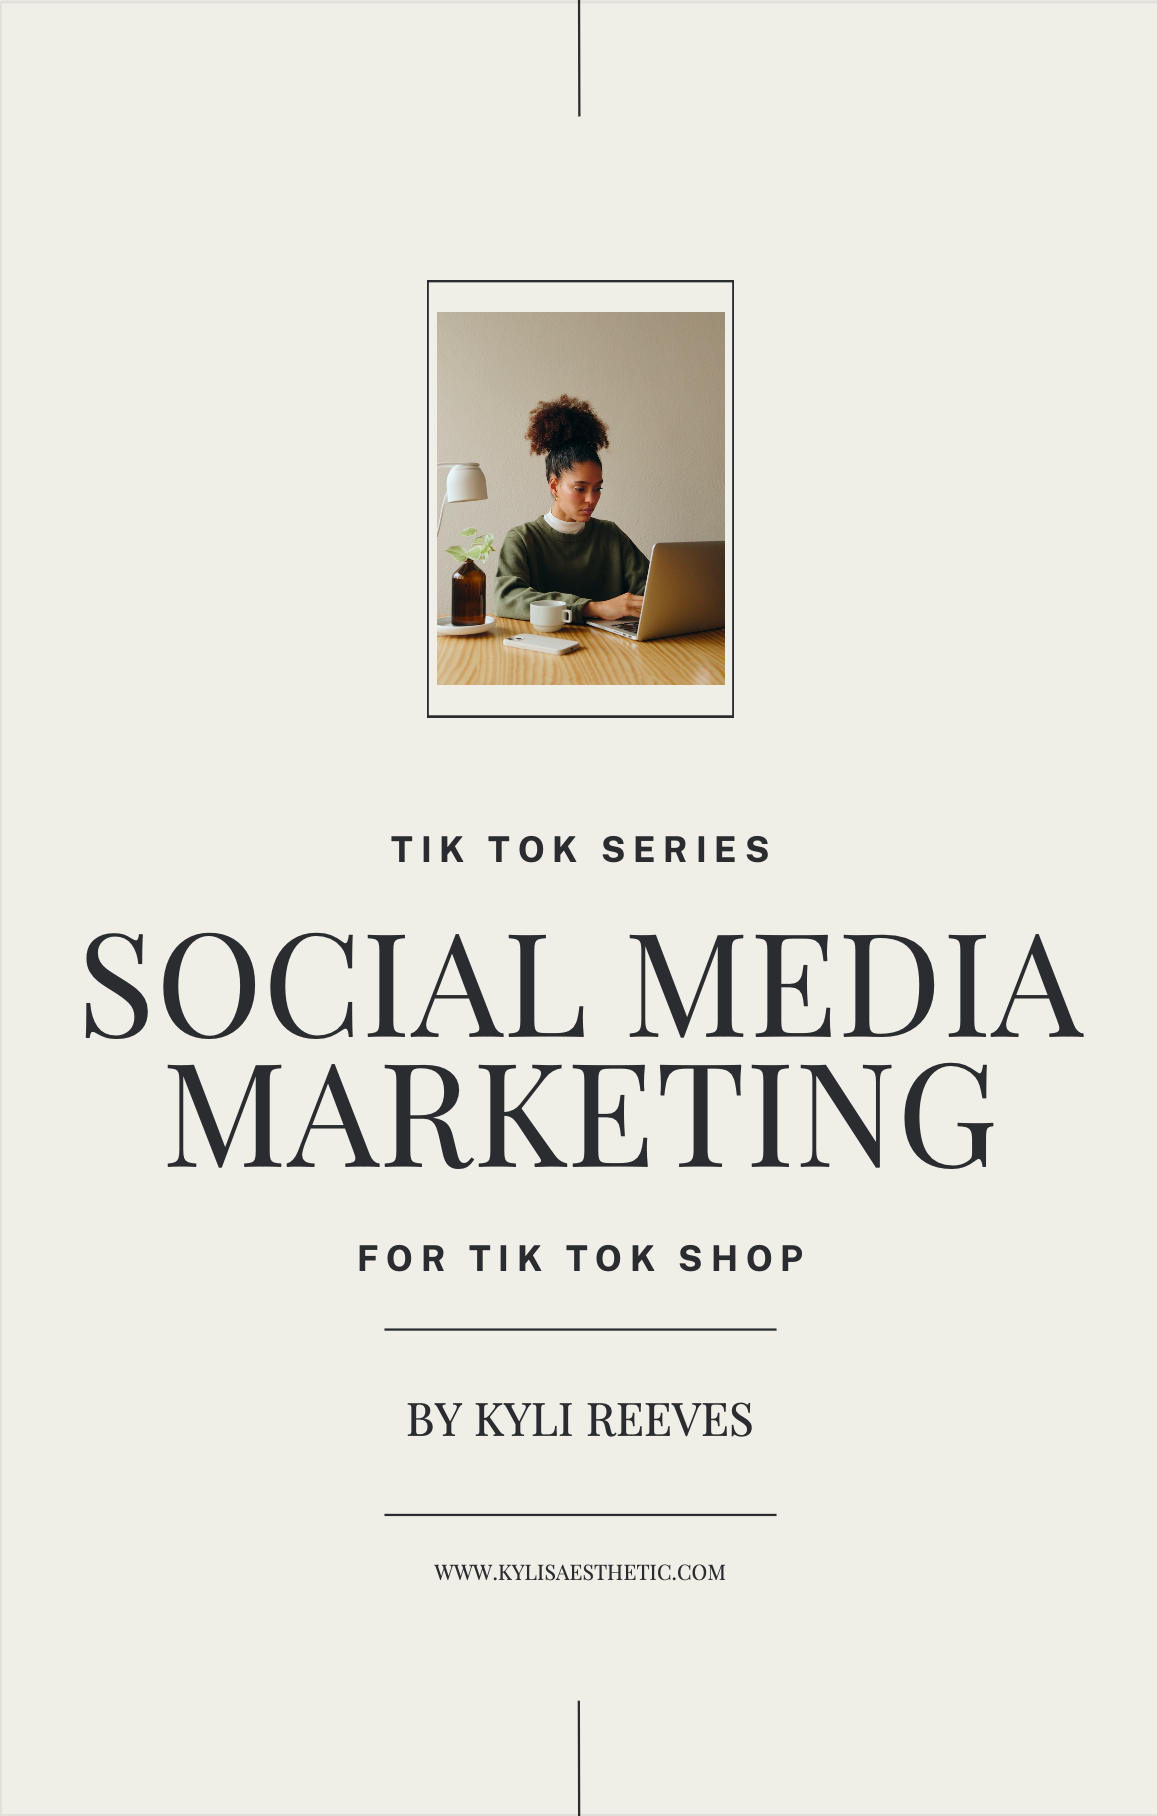 Tik Tok Series (Social Media Marketing for Tik Tok Shop) Ebook